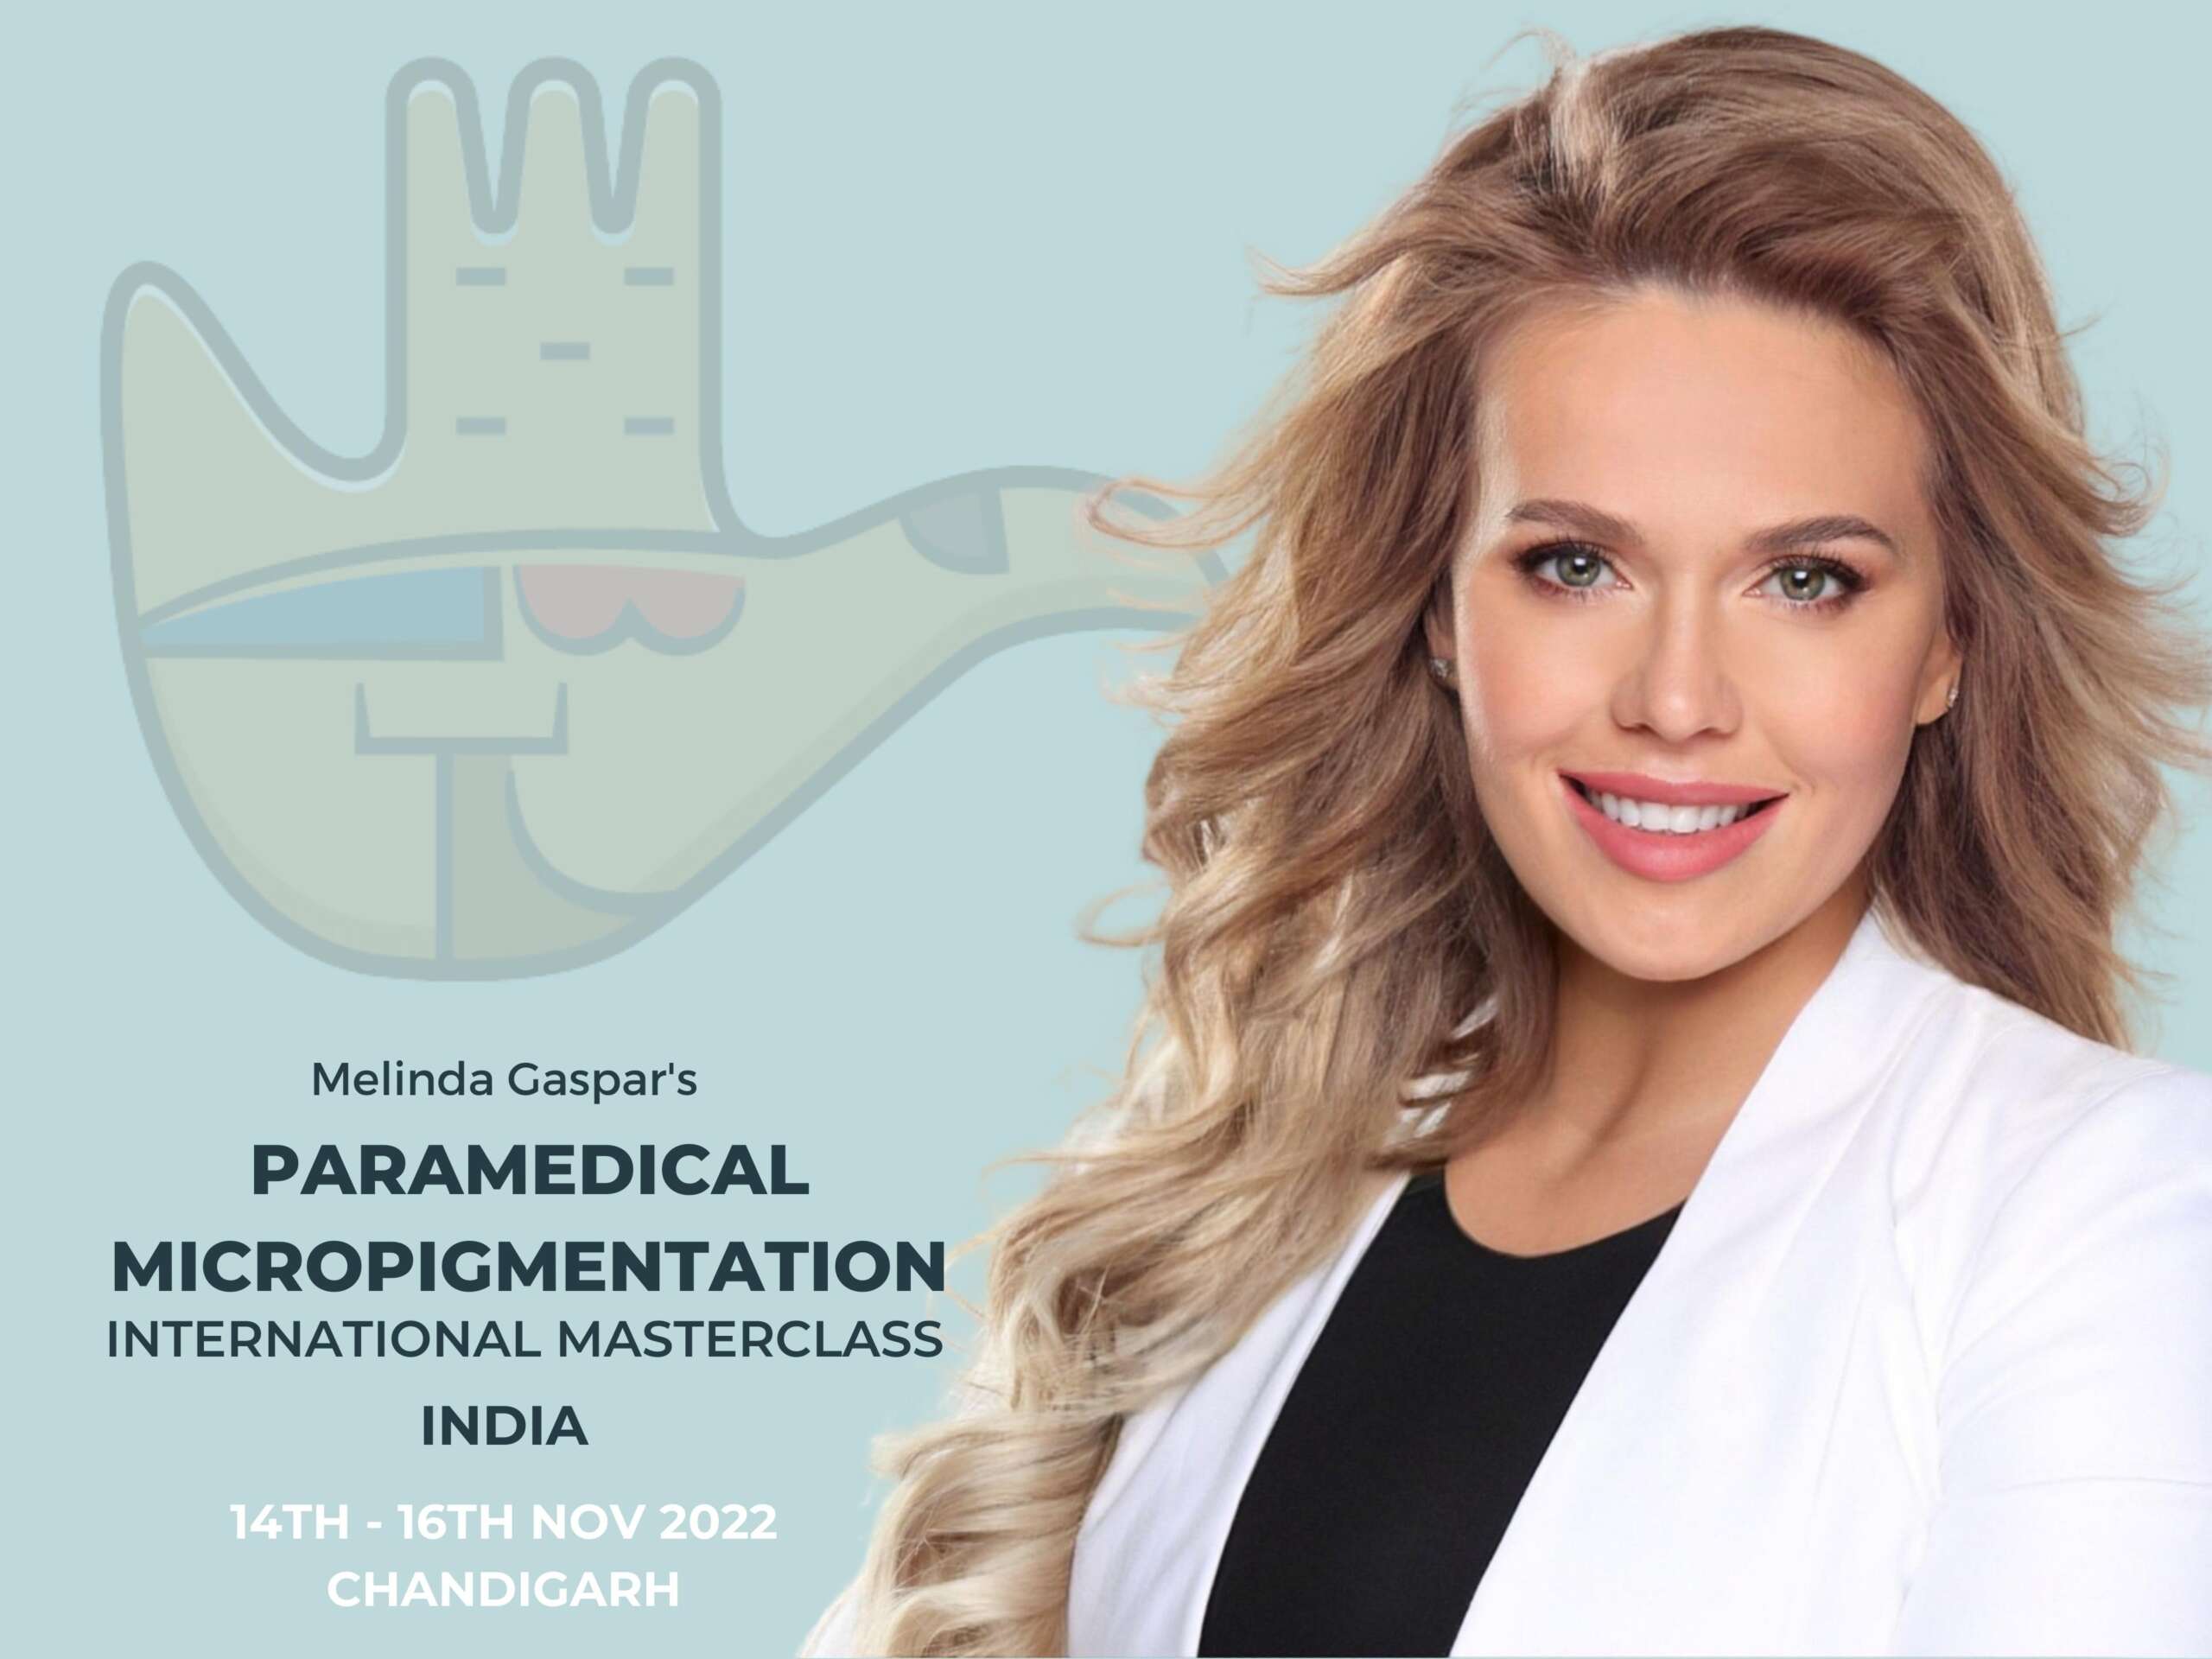 Paramedical micropigmentation